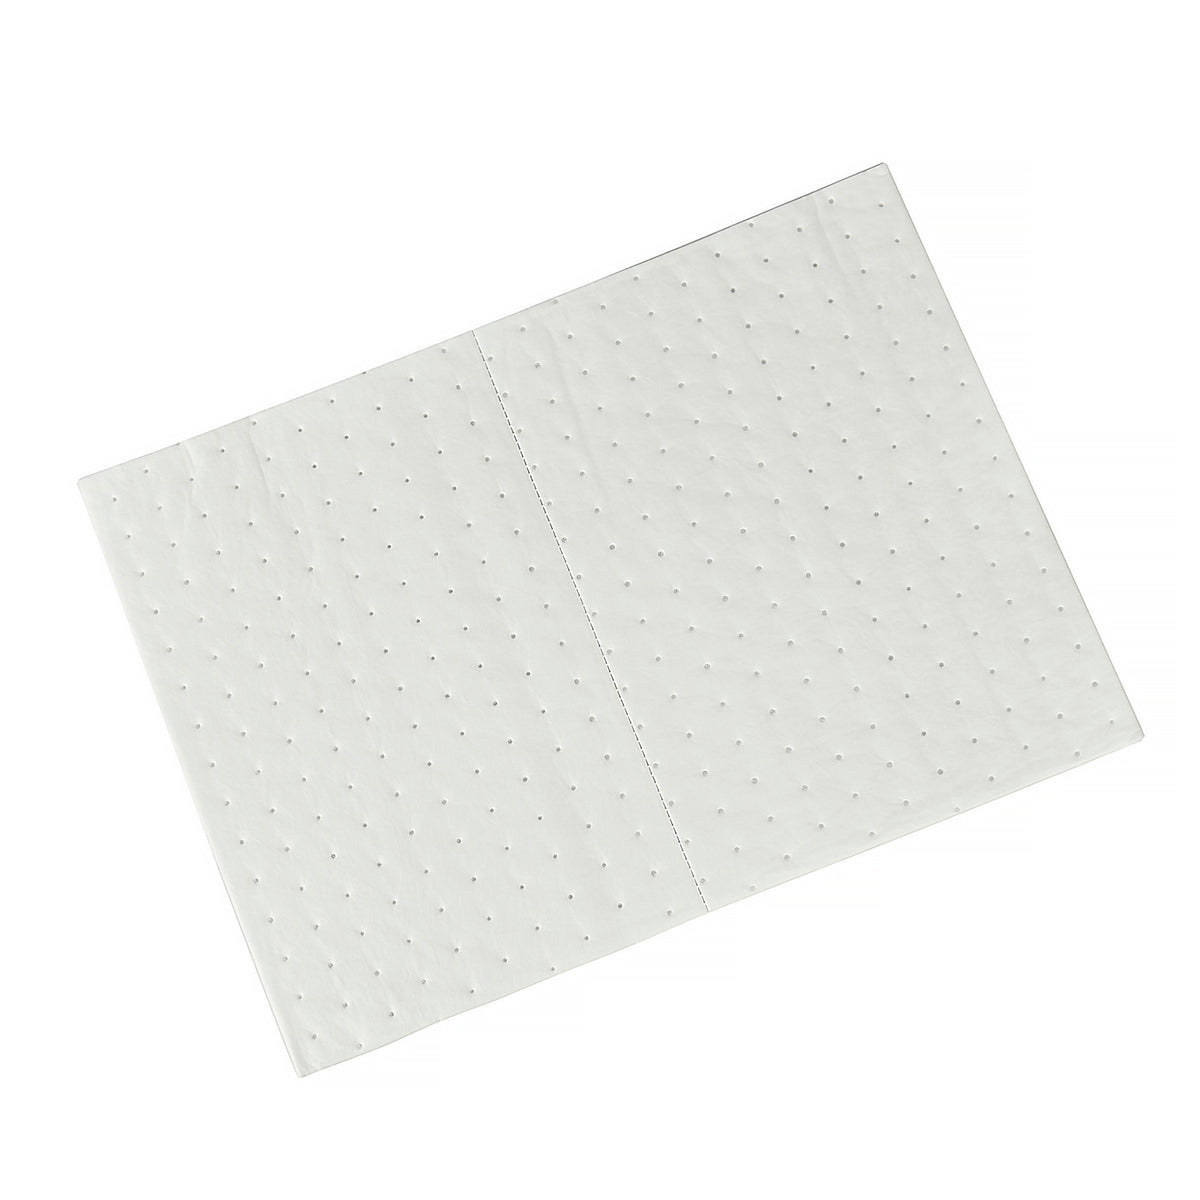 Aain LT011A Heavy Weight polypropylene Absorbent Pad, White Absorbing Heavy  Weight Universal Absorbent Mat Pad, 20 Length x 15 Width